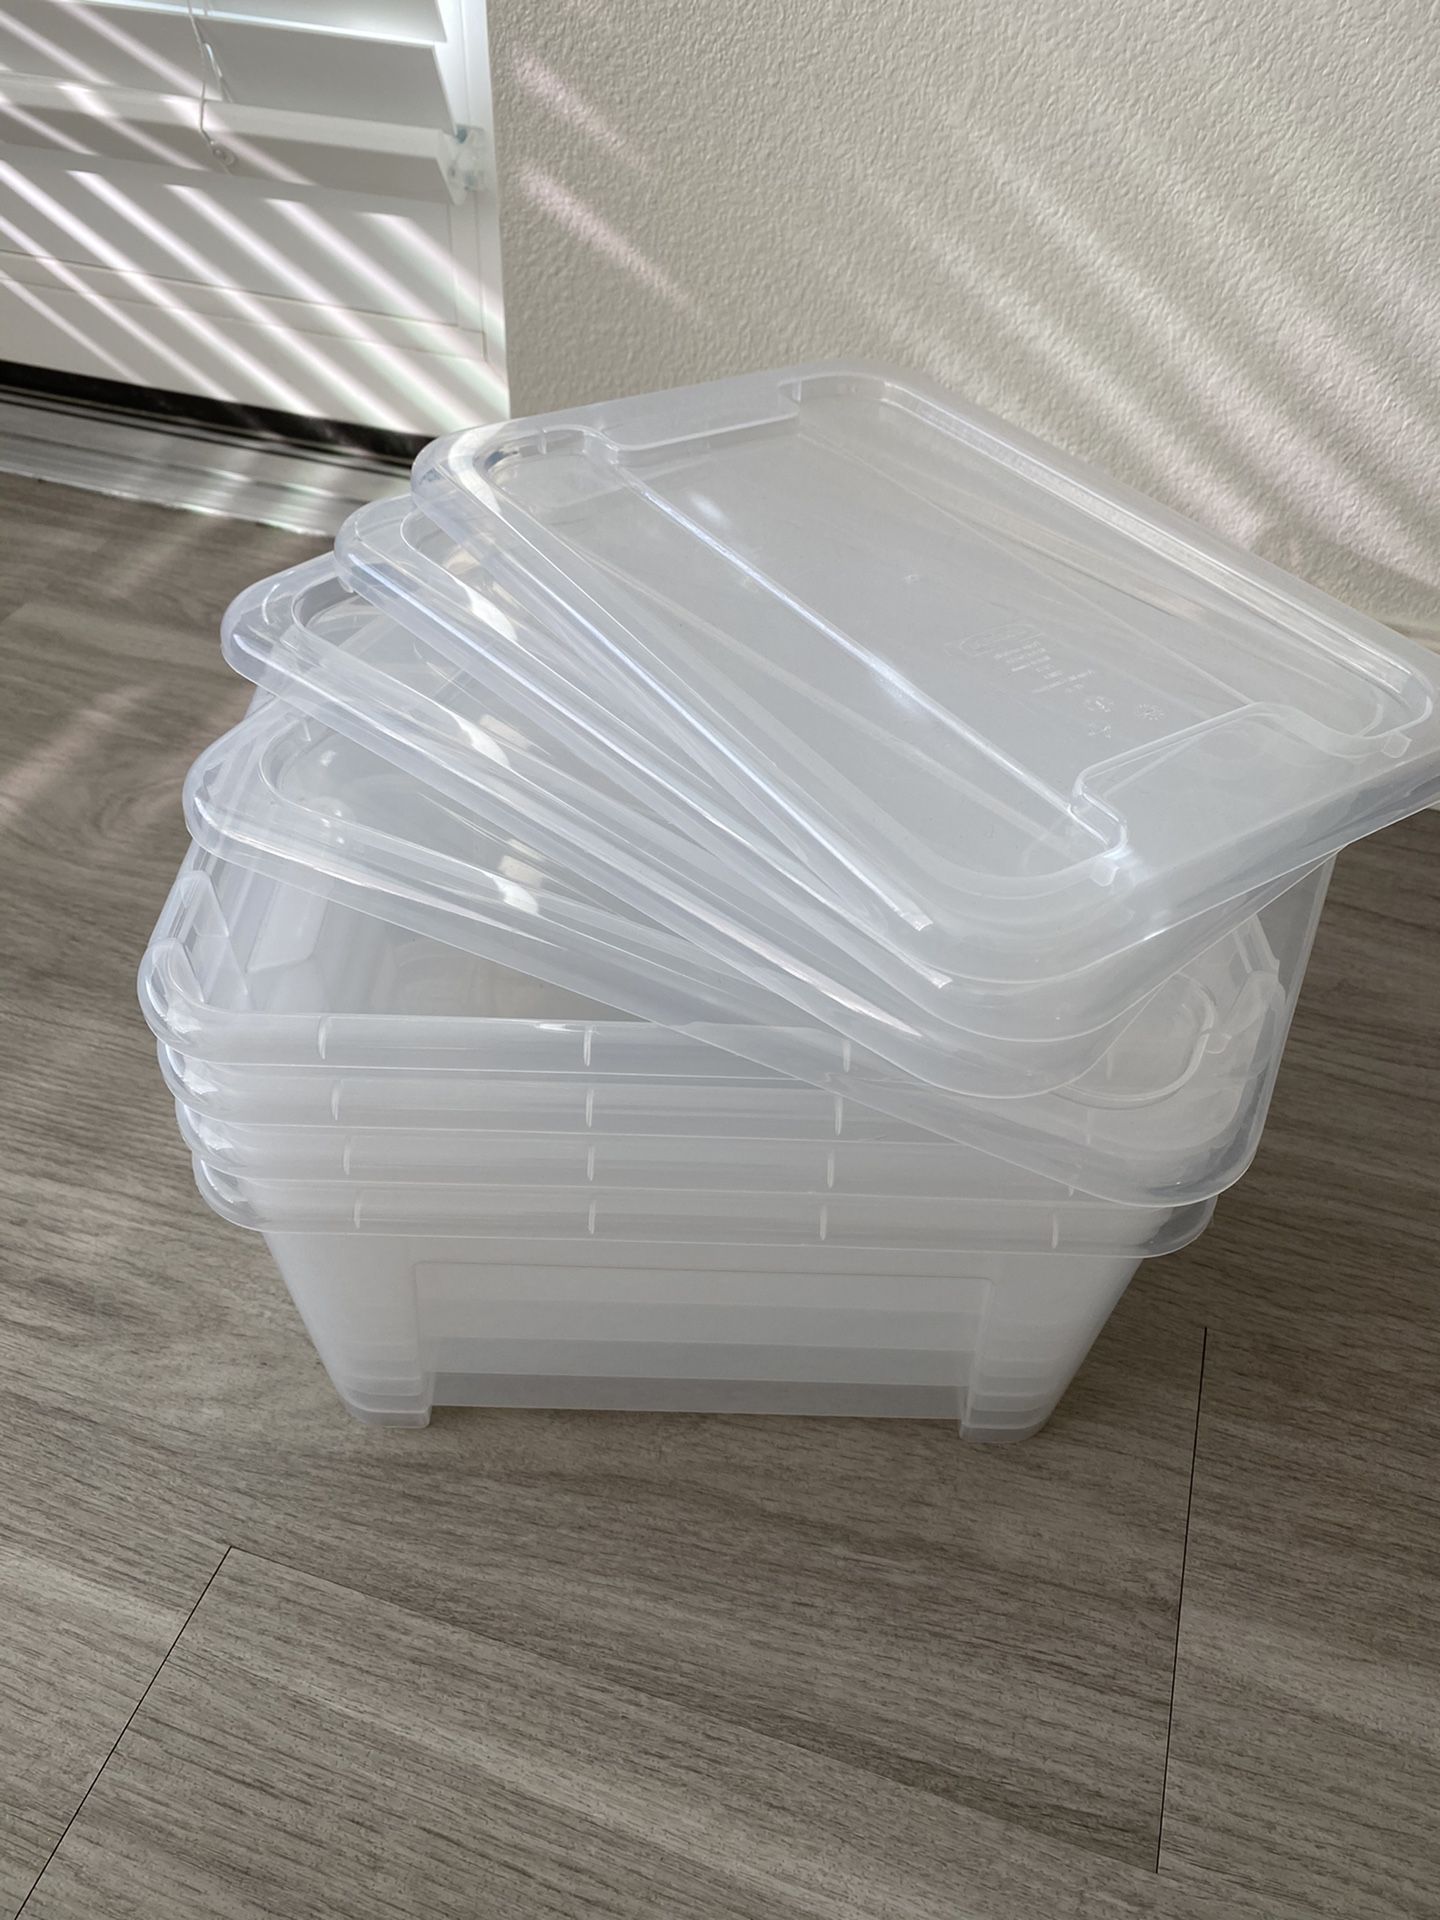 IKEA Plastic storage containers